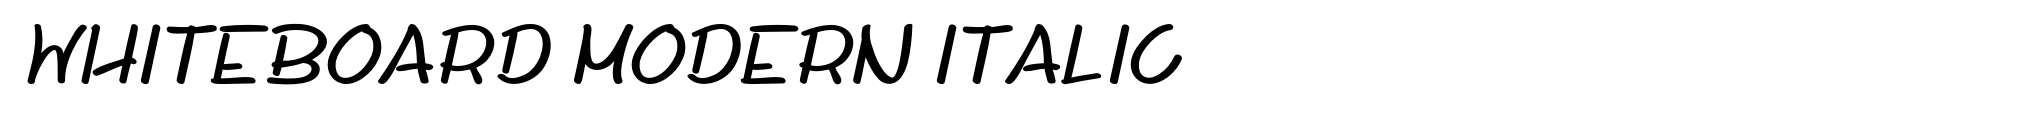 Whiteboard Modern Italic image